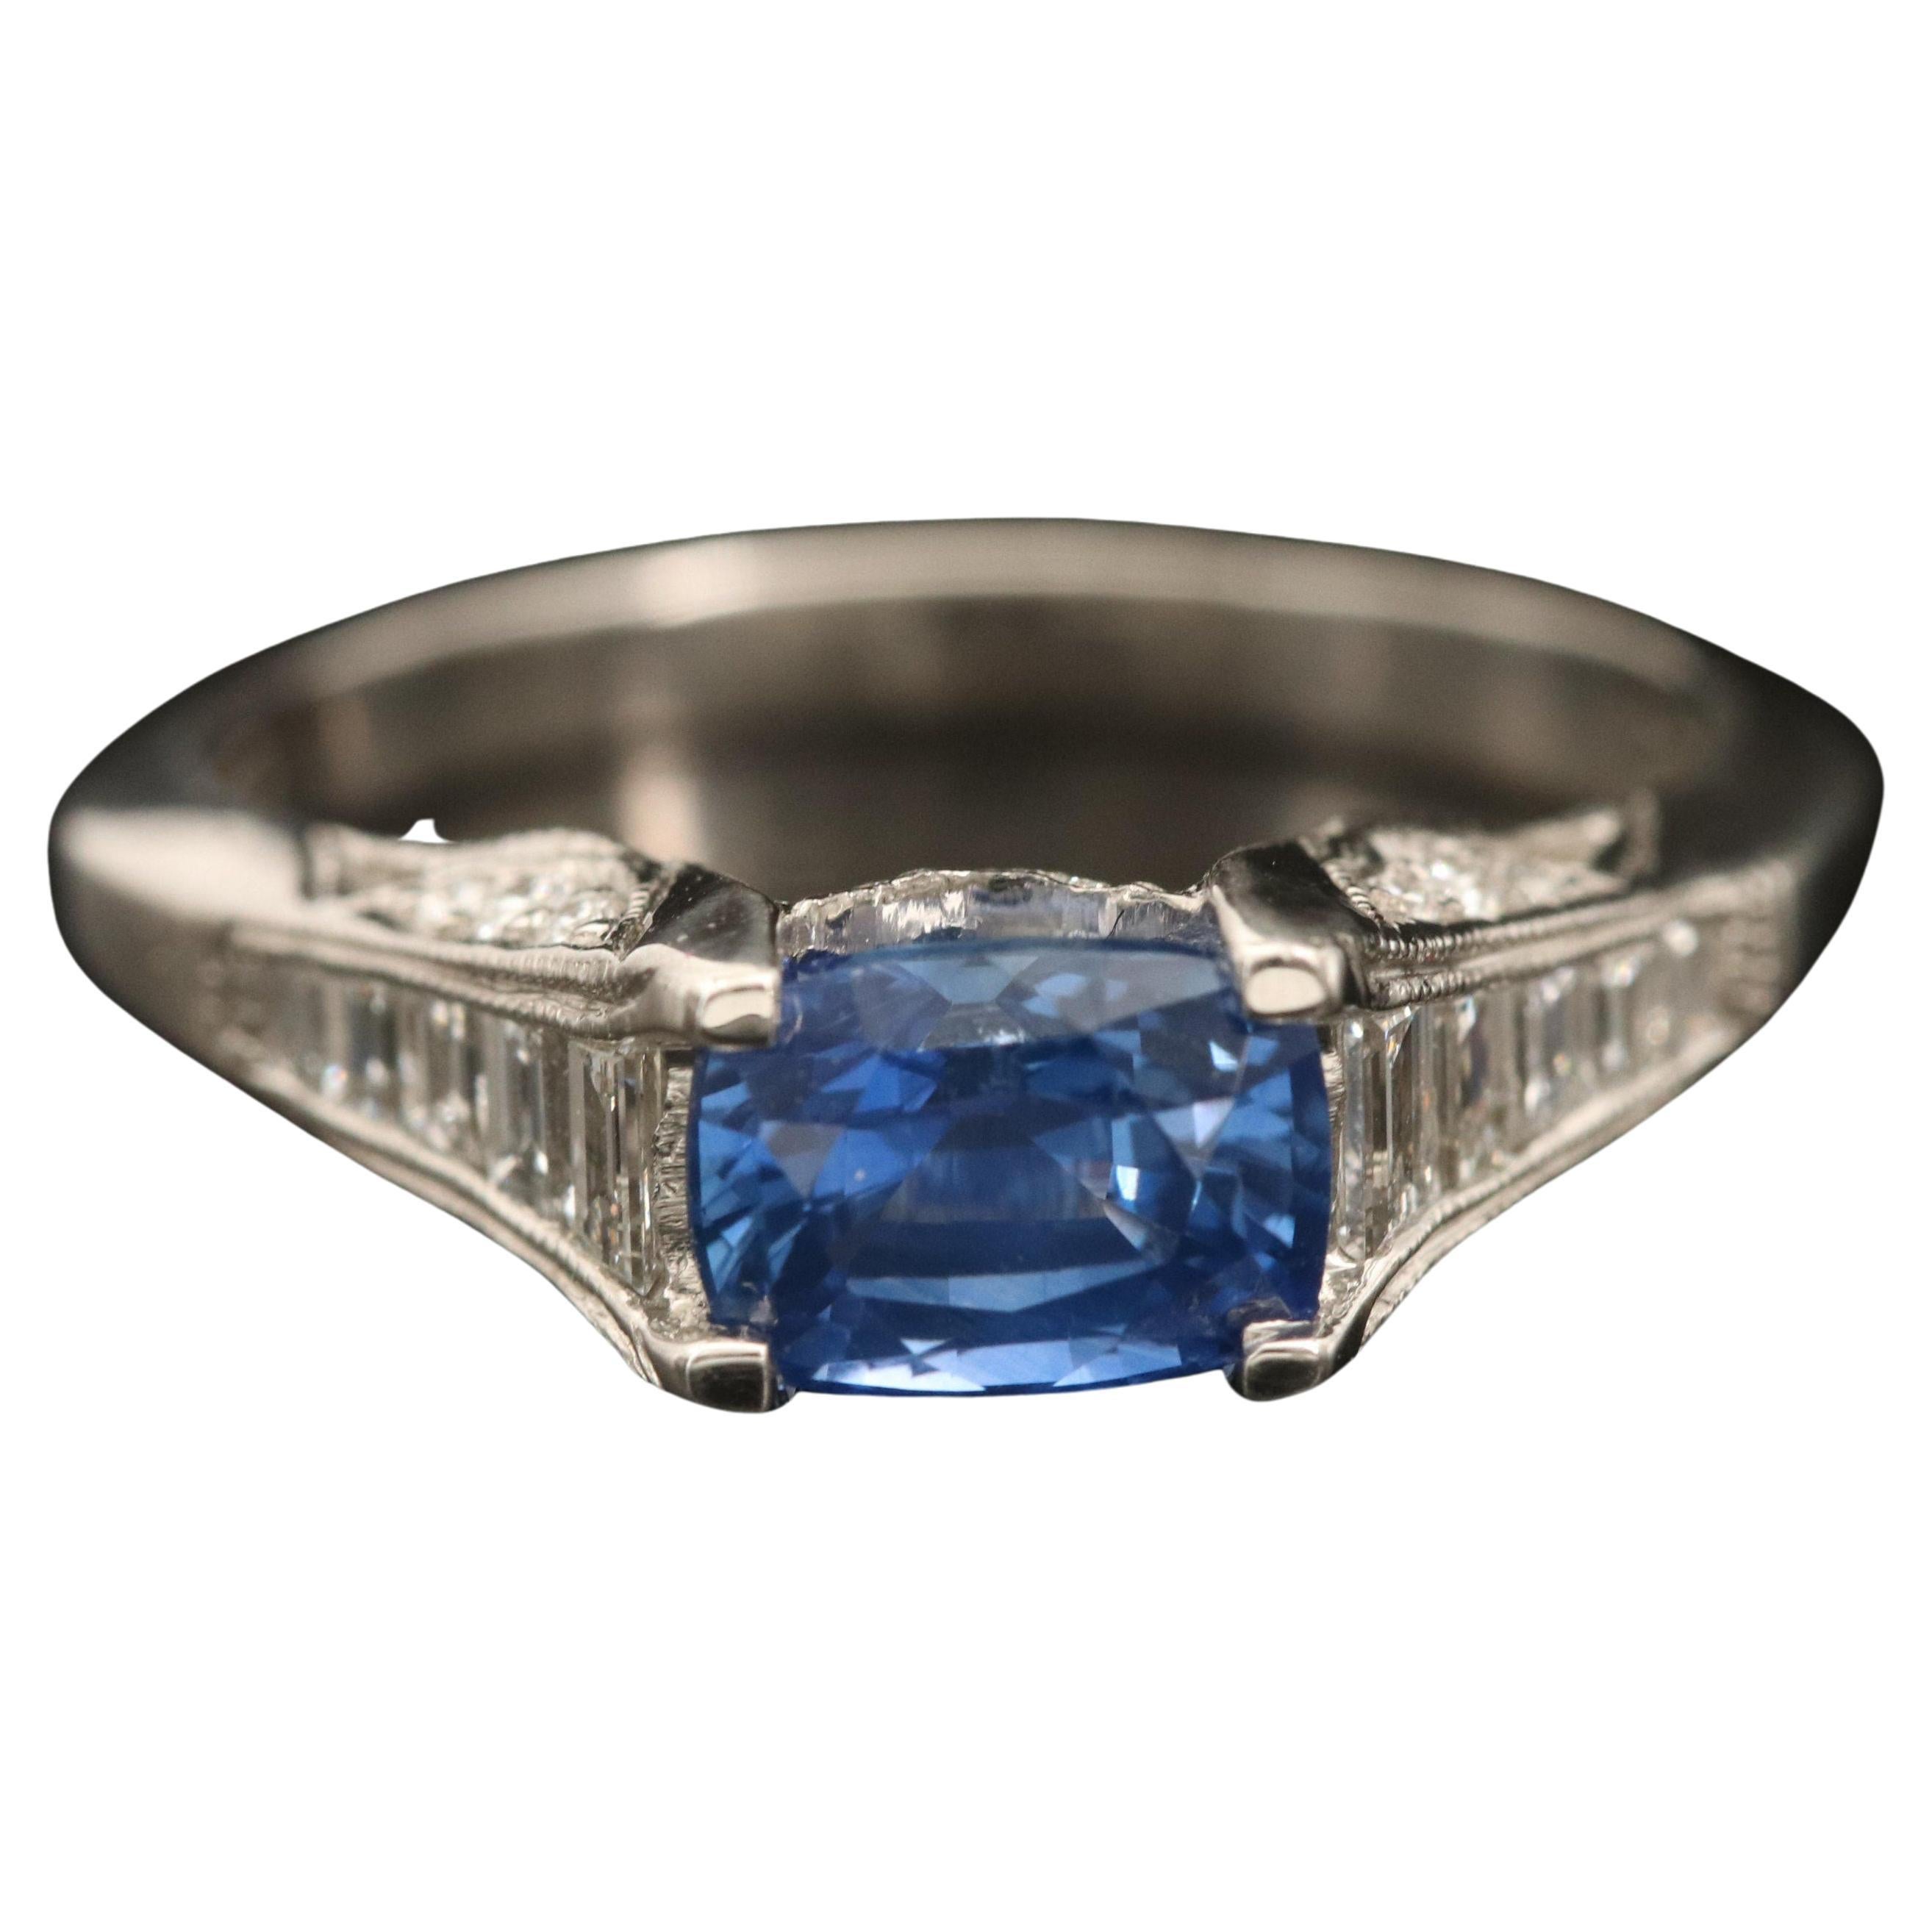 For Sale:  Vintage Cushion Cut Sapphire Engagement Ring, Minimalist Sapphire Diamond Ring